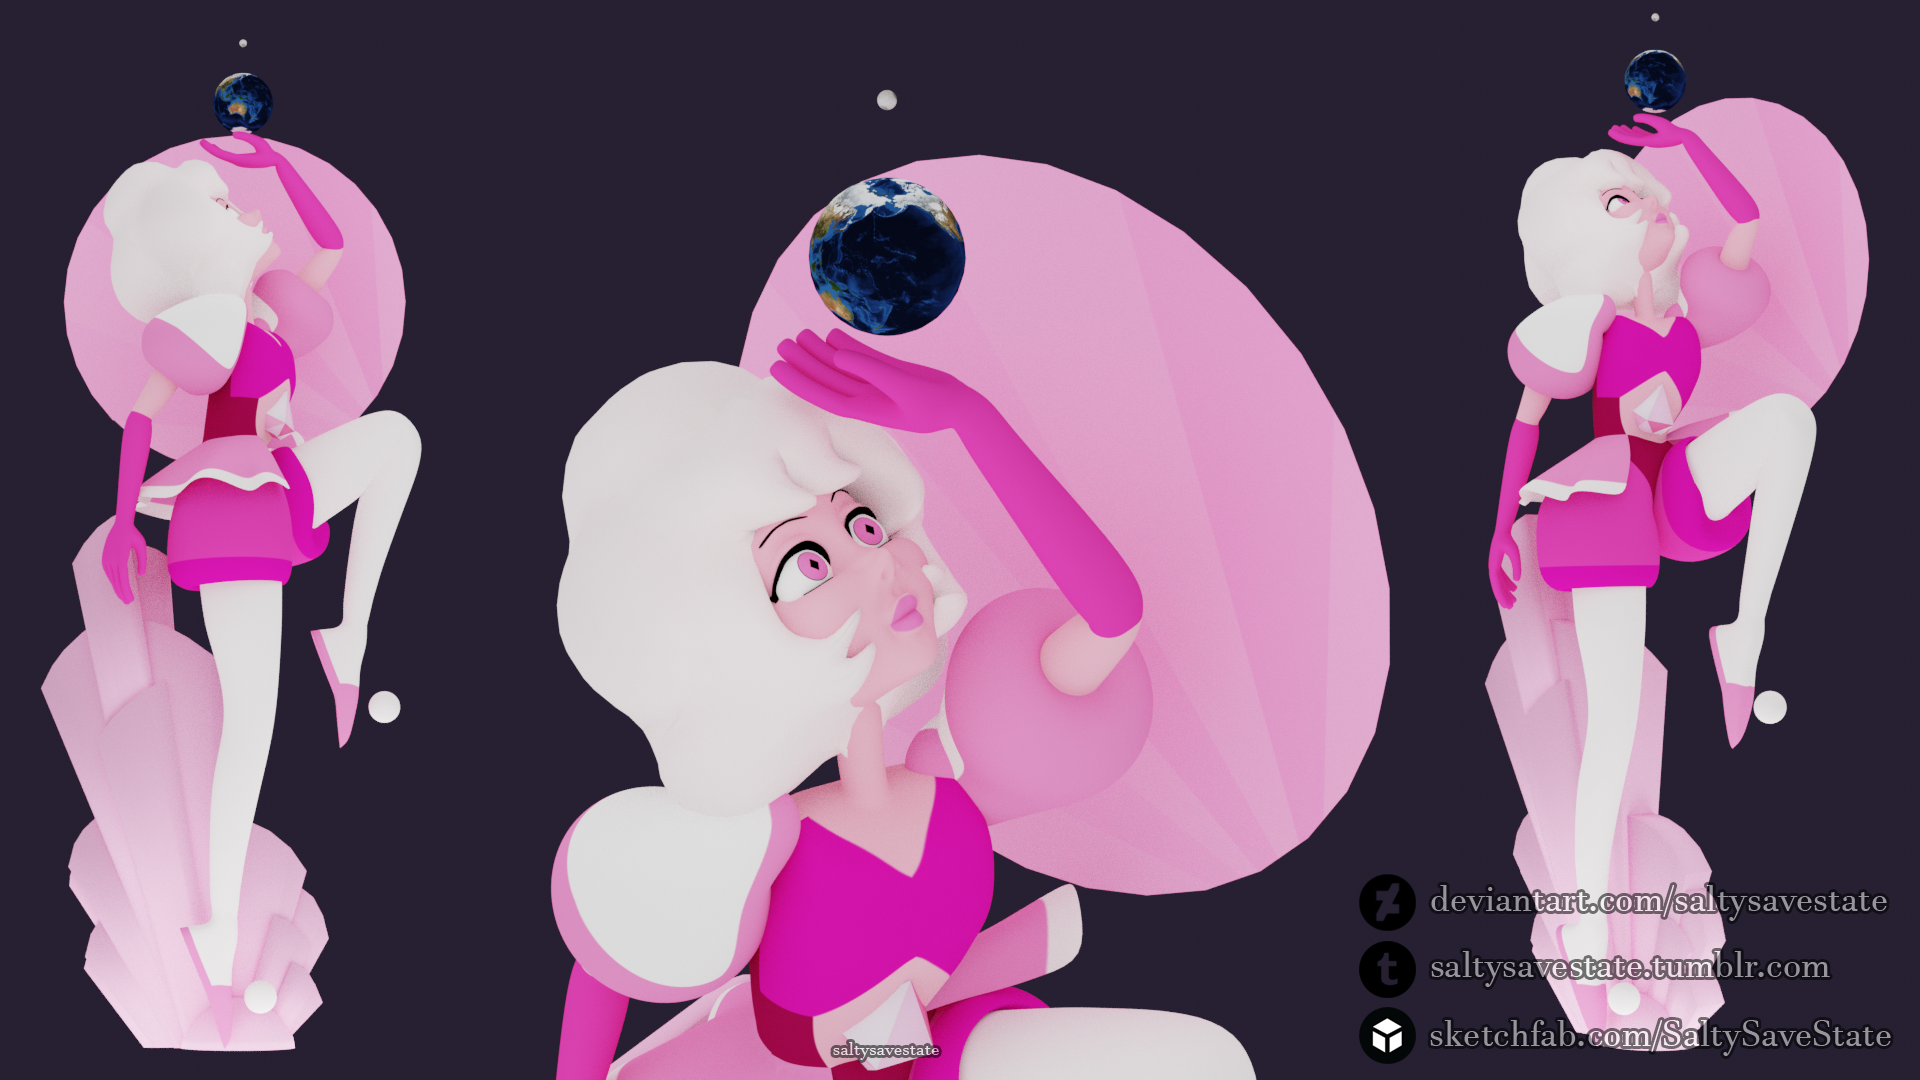 Steven Universe] Pink Diamond by SaltySaveState on DeviantArt